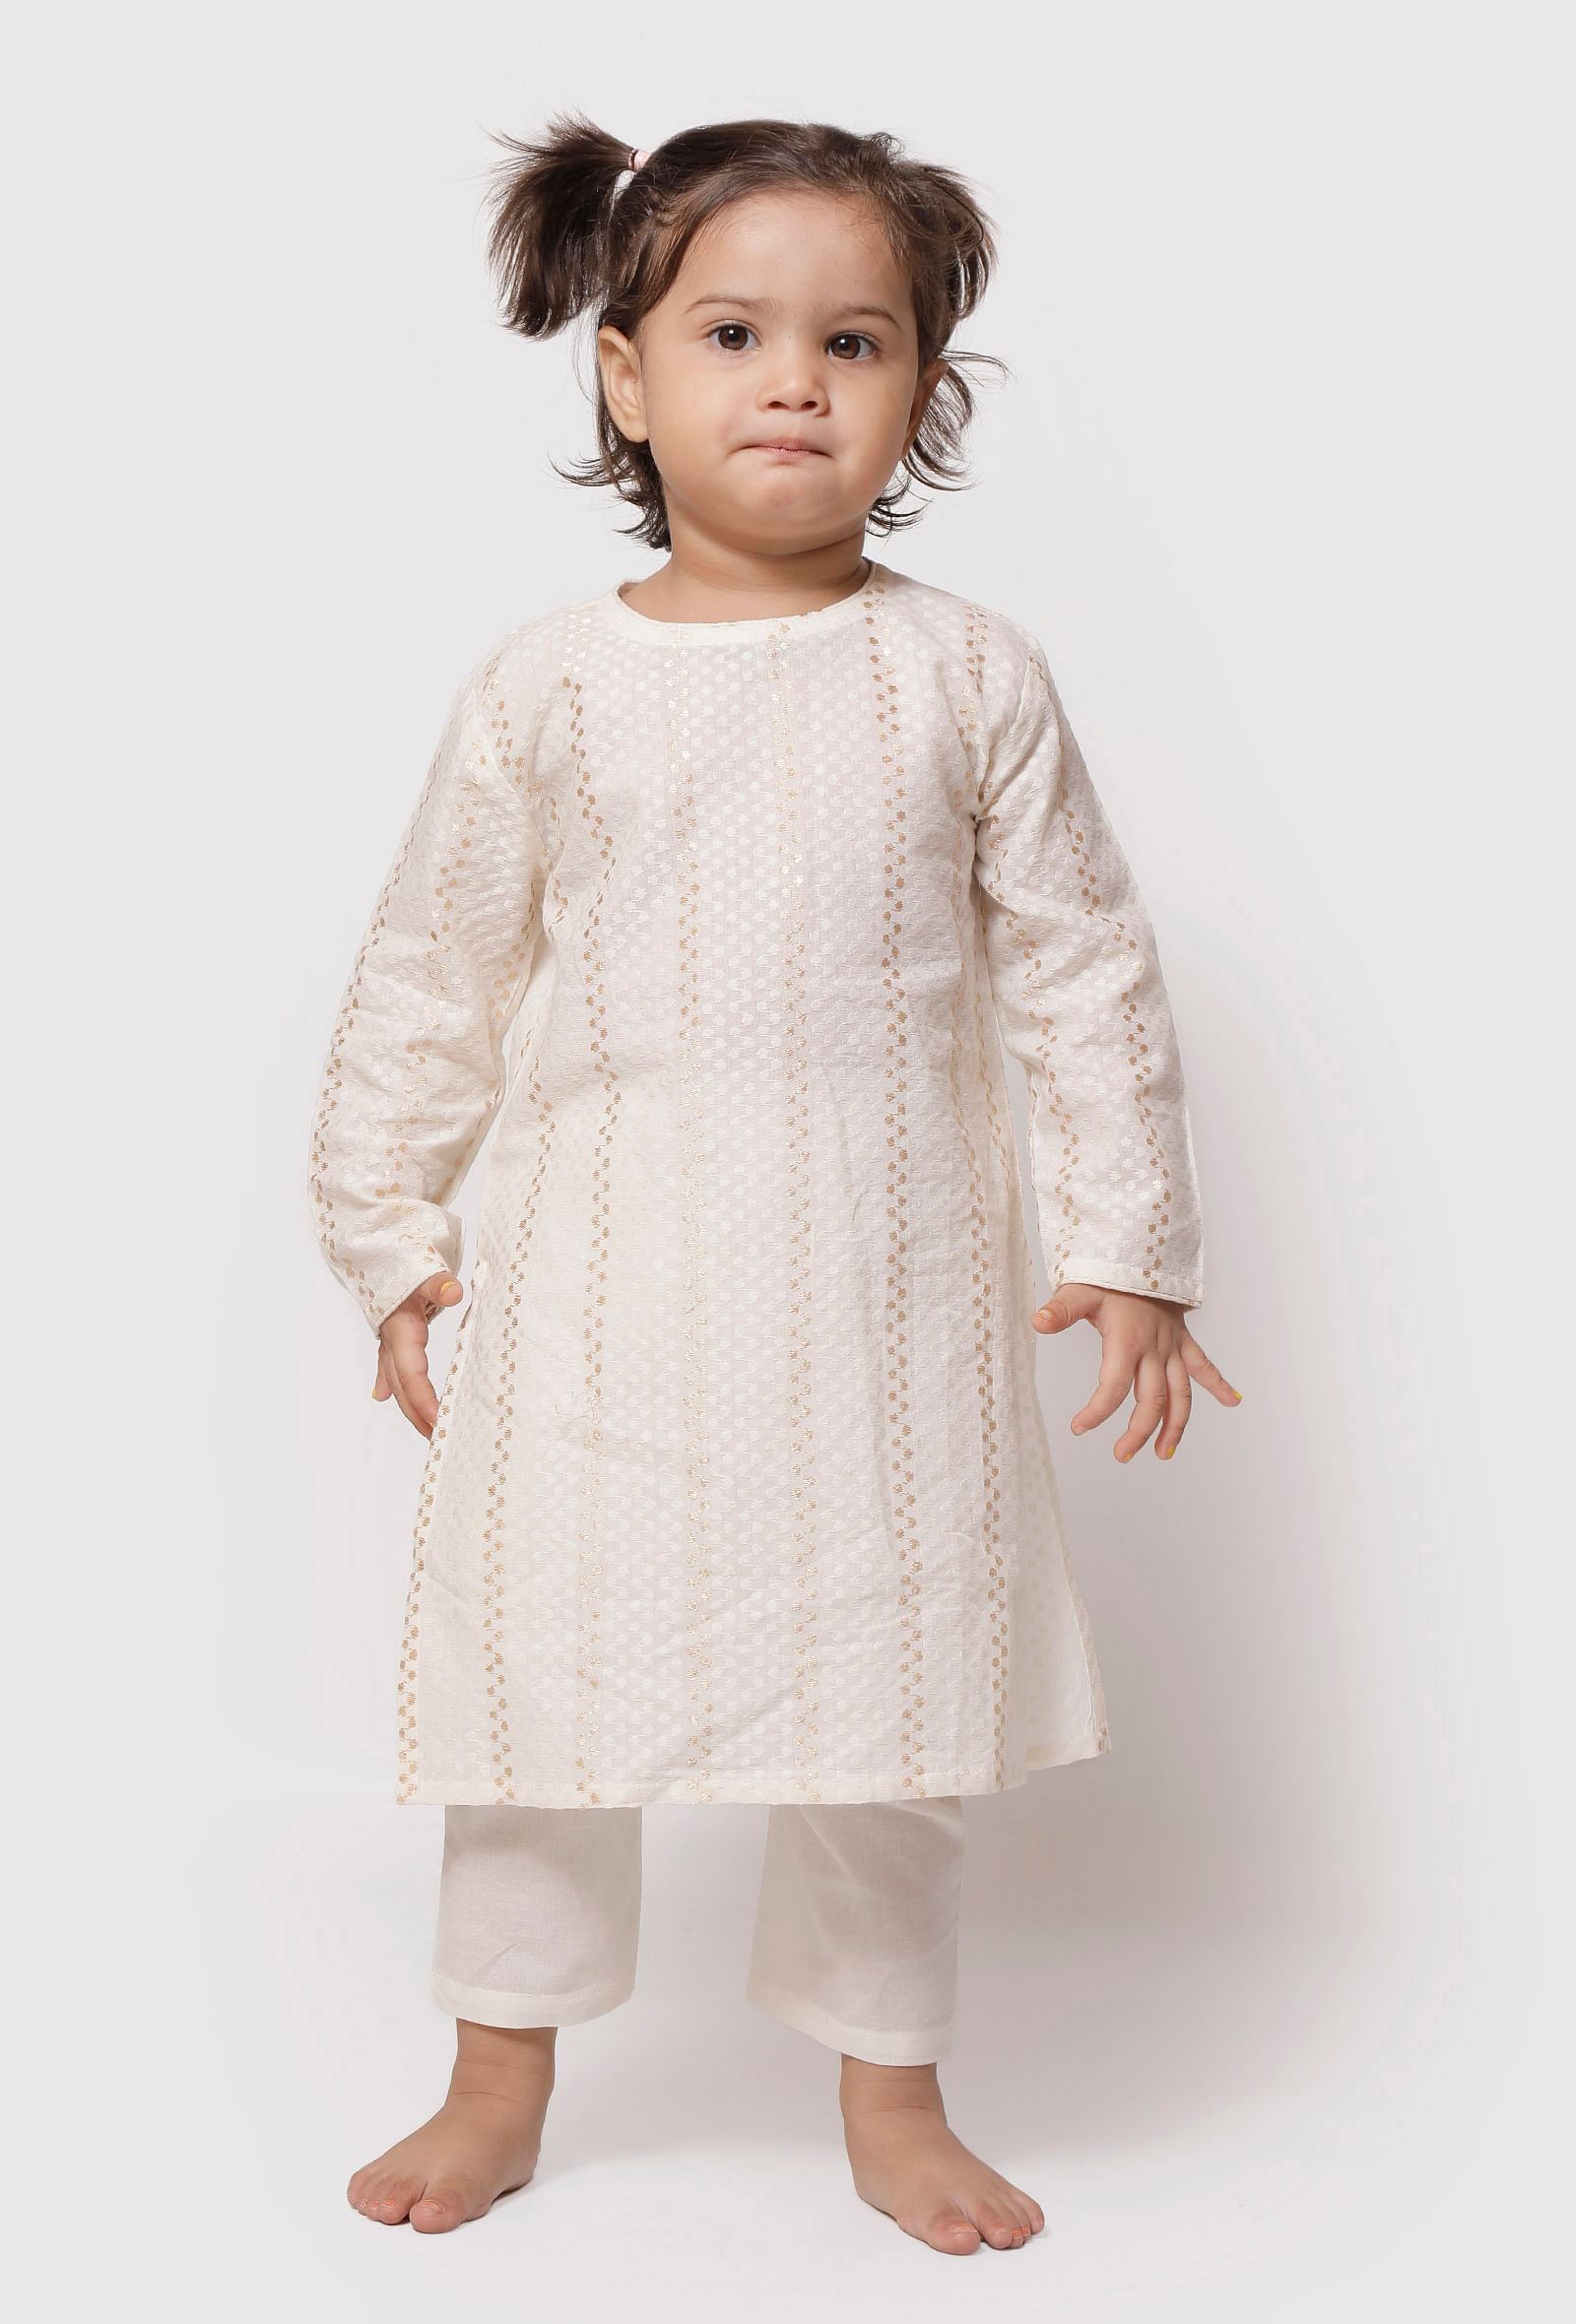 Buy patiala kurti pajama in India @ Limeroad